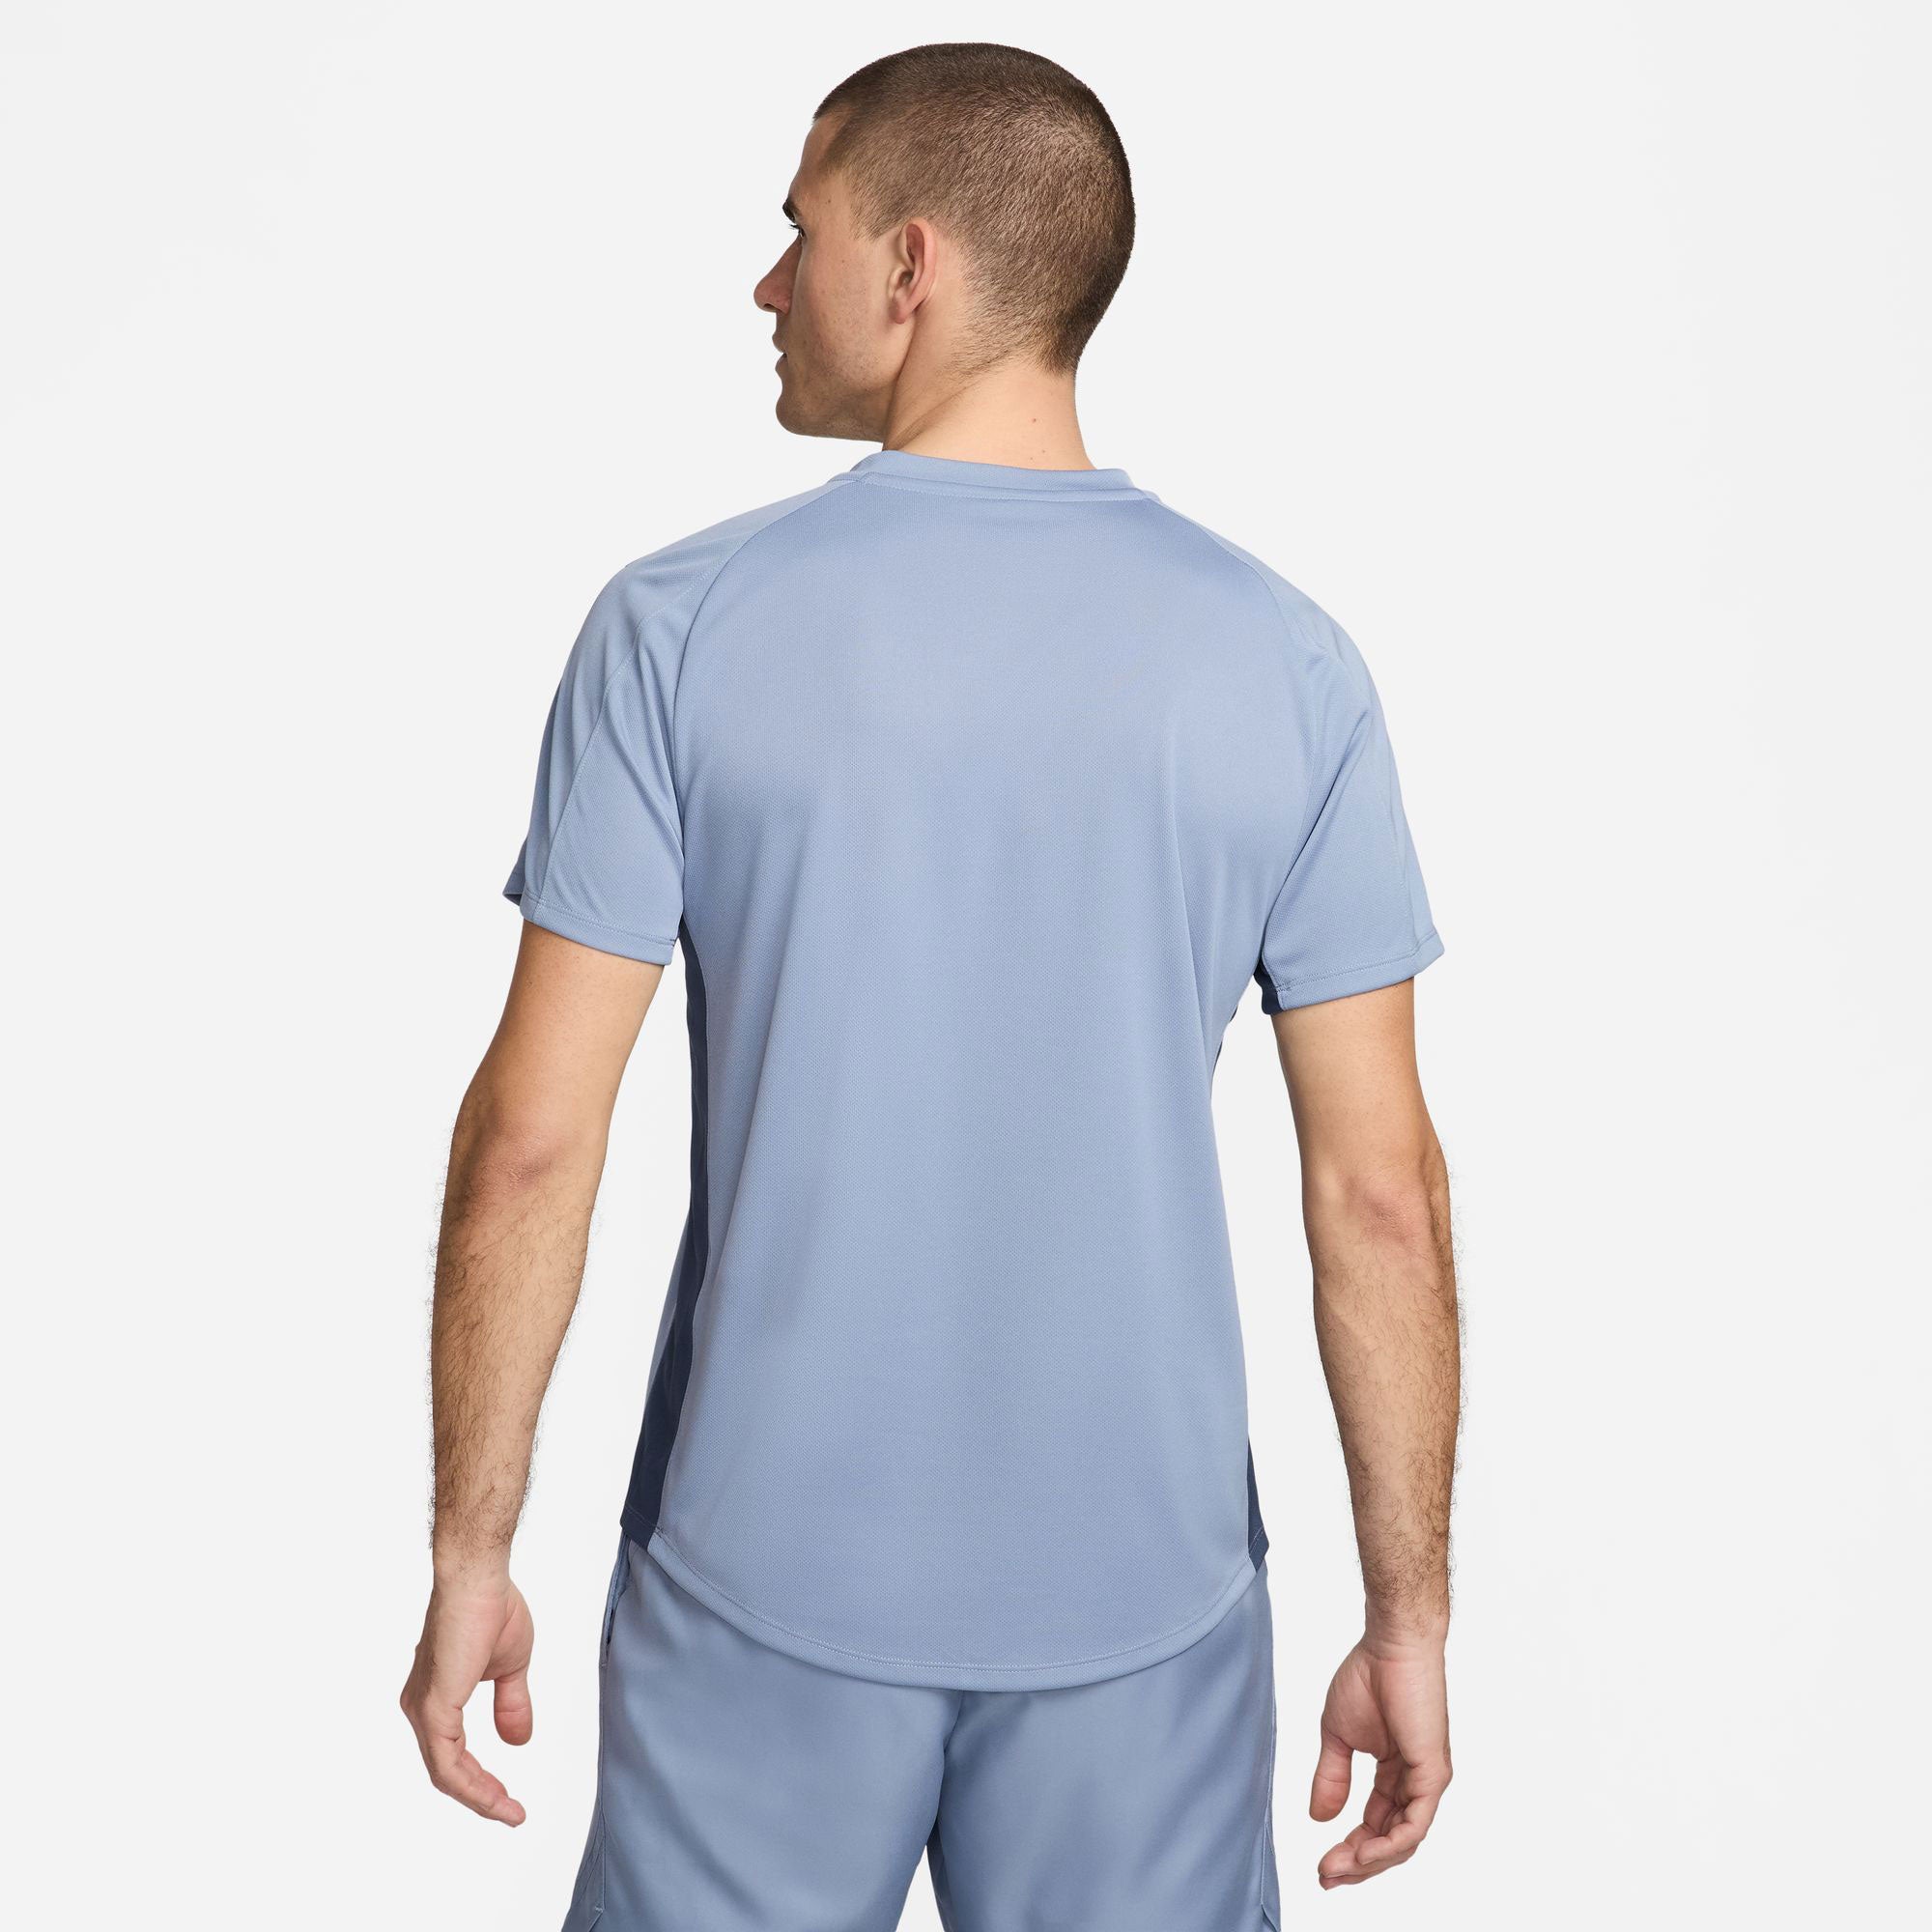 NikeCourt Victory Men's Dri-FIT Tennis Shirt - Blue (2)